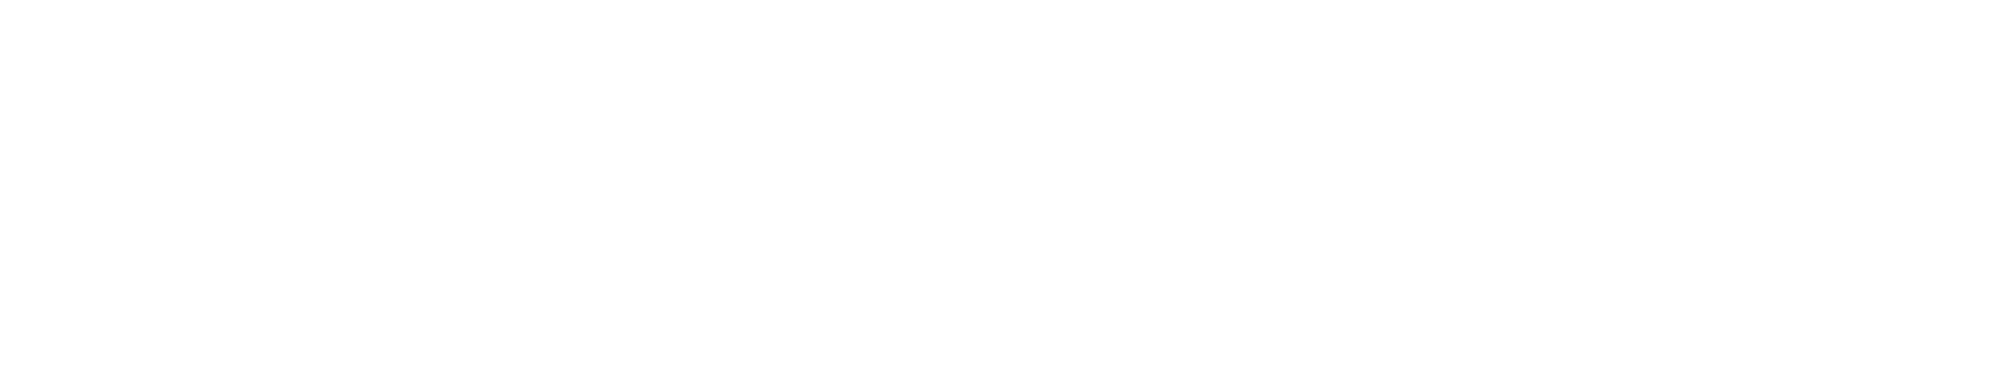 12 Church Juice - Logo - Horizontal - White